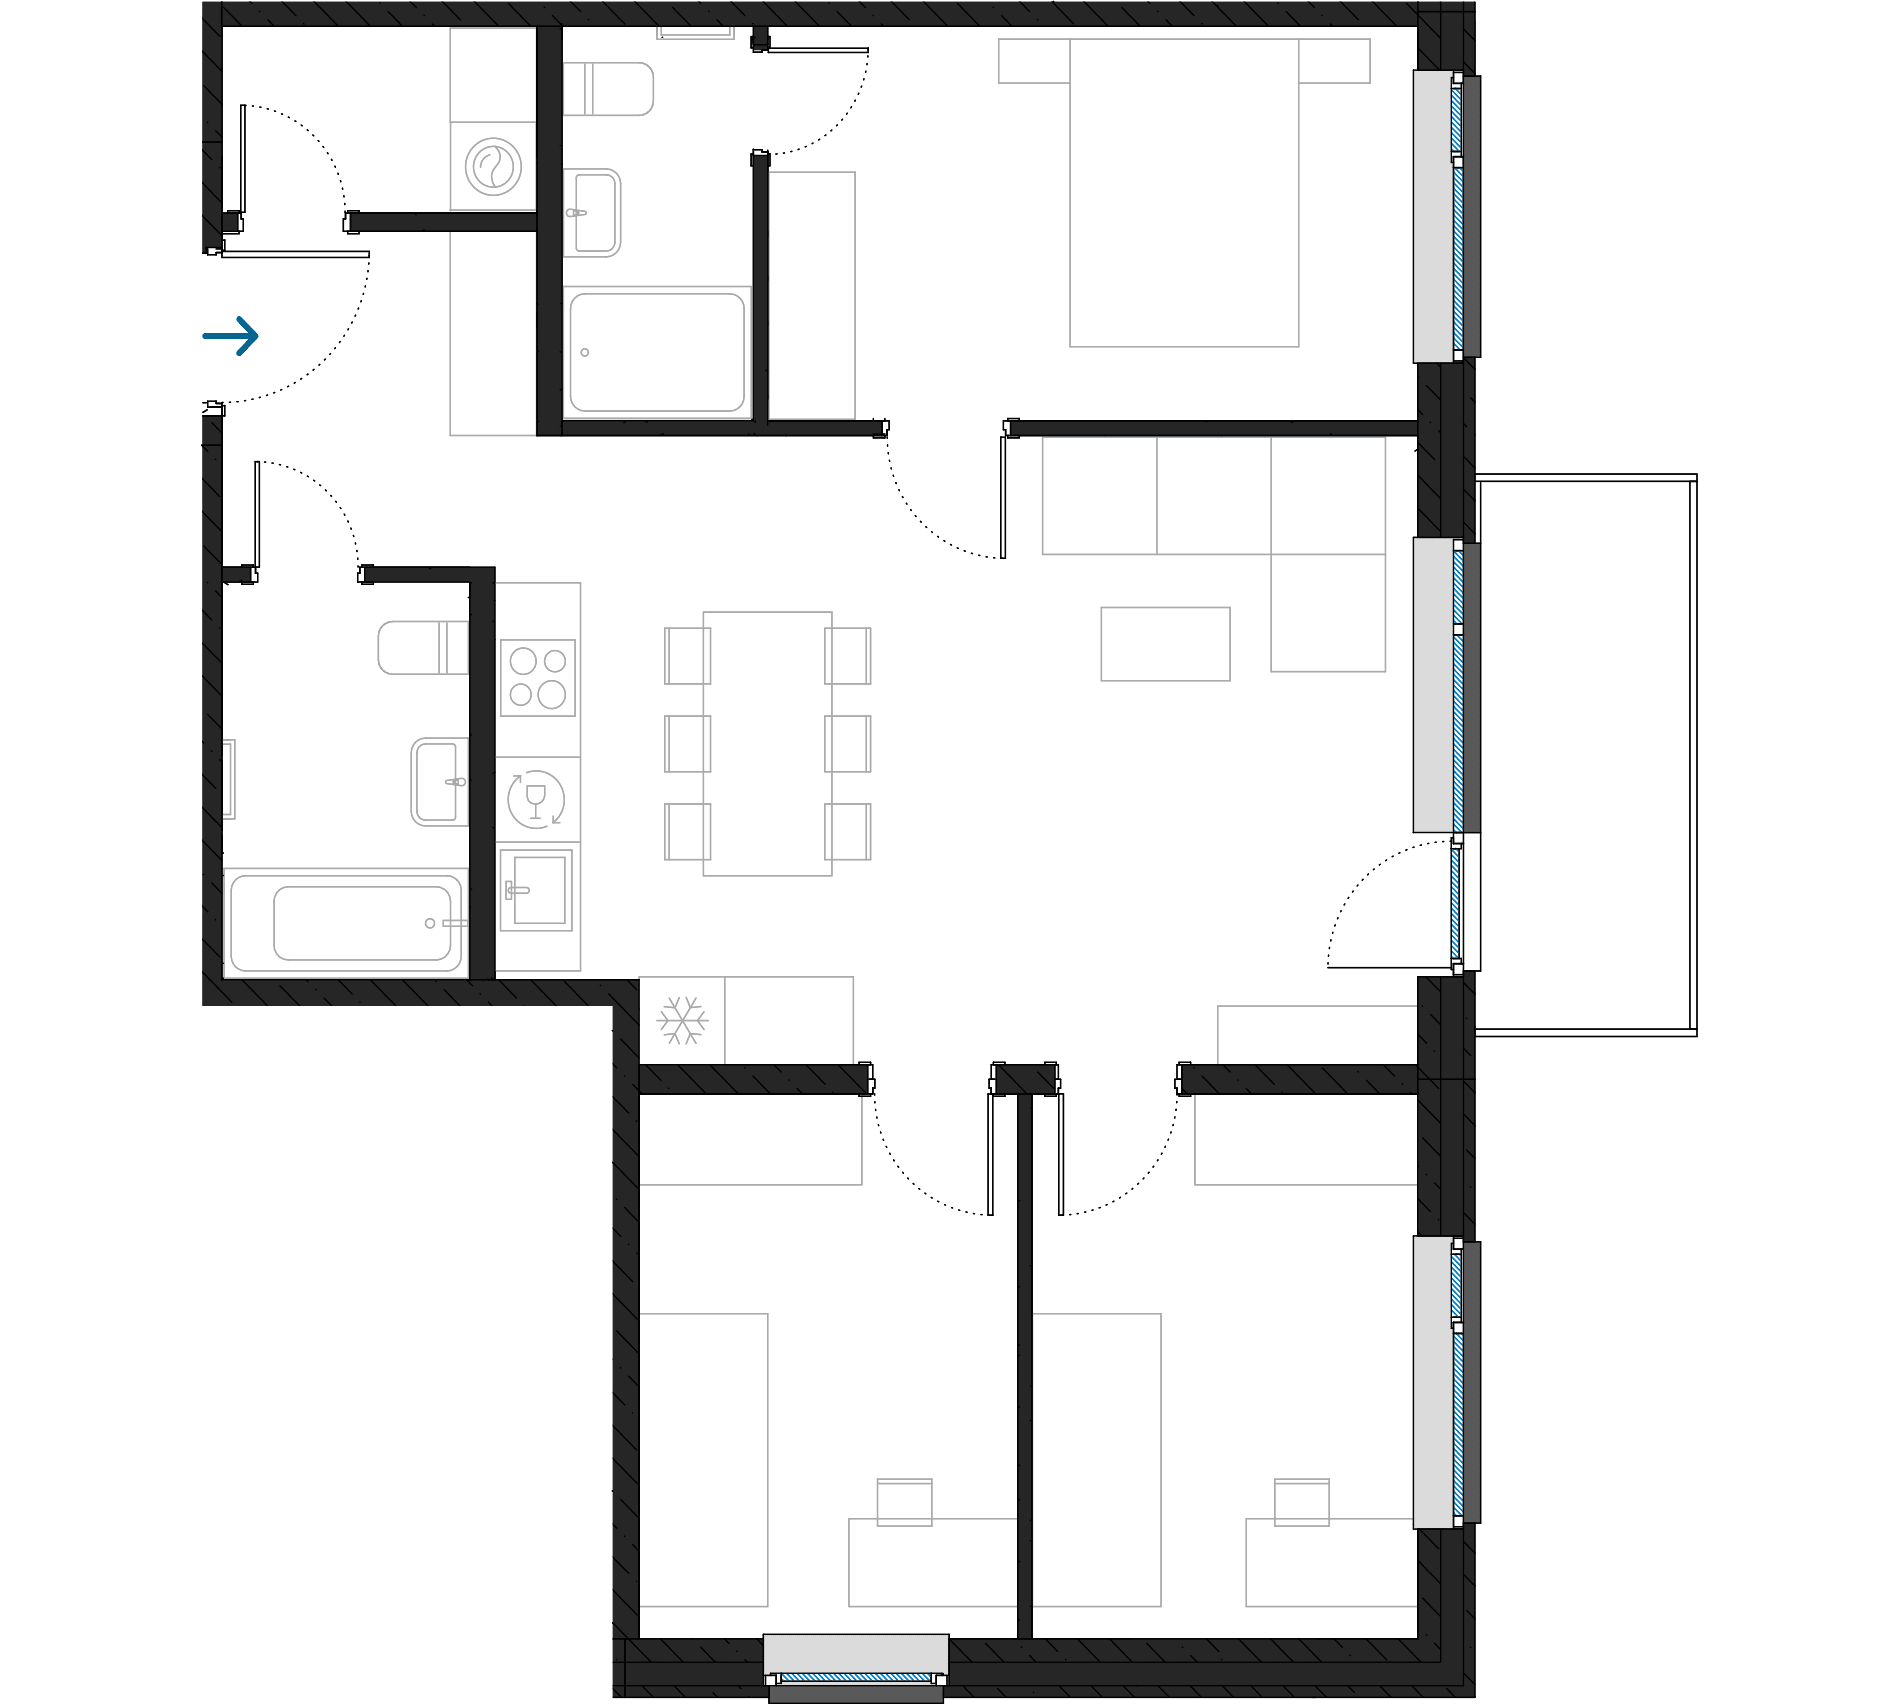 4A-1b floorplan